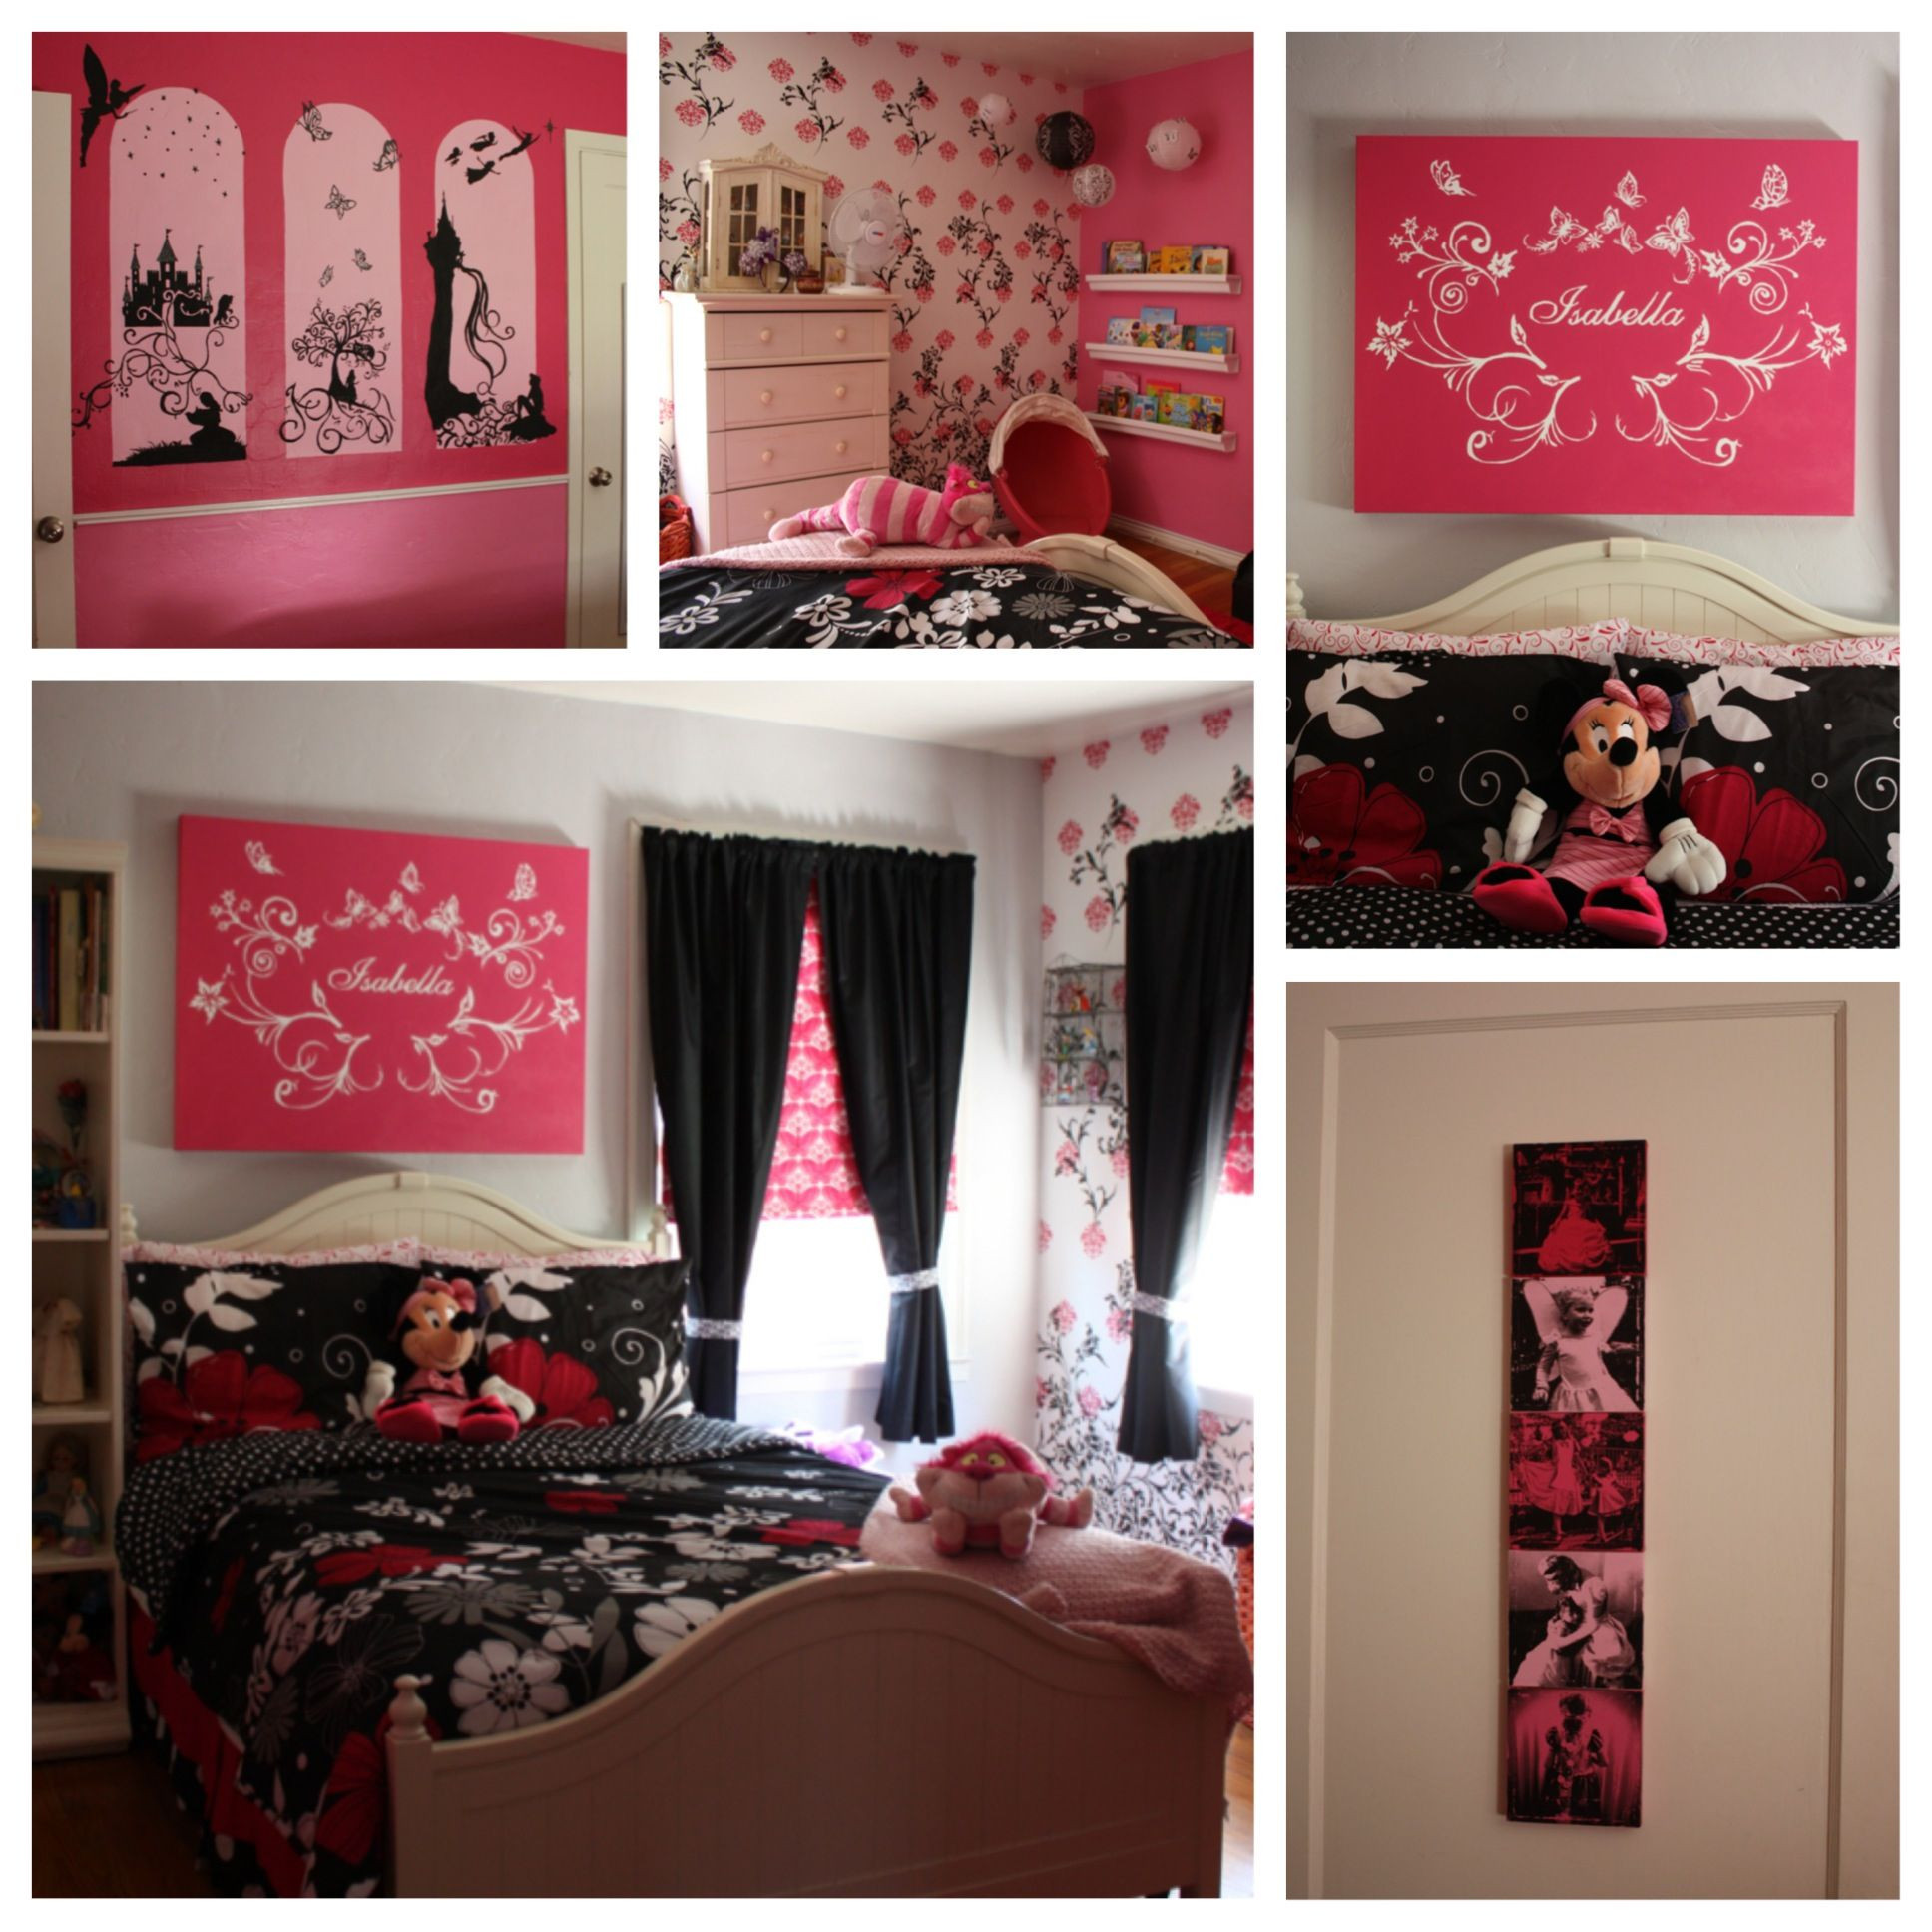 Disney DIY Room Decor
 The pleted bedroom Pink and black Disney themed DIY